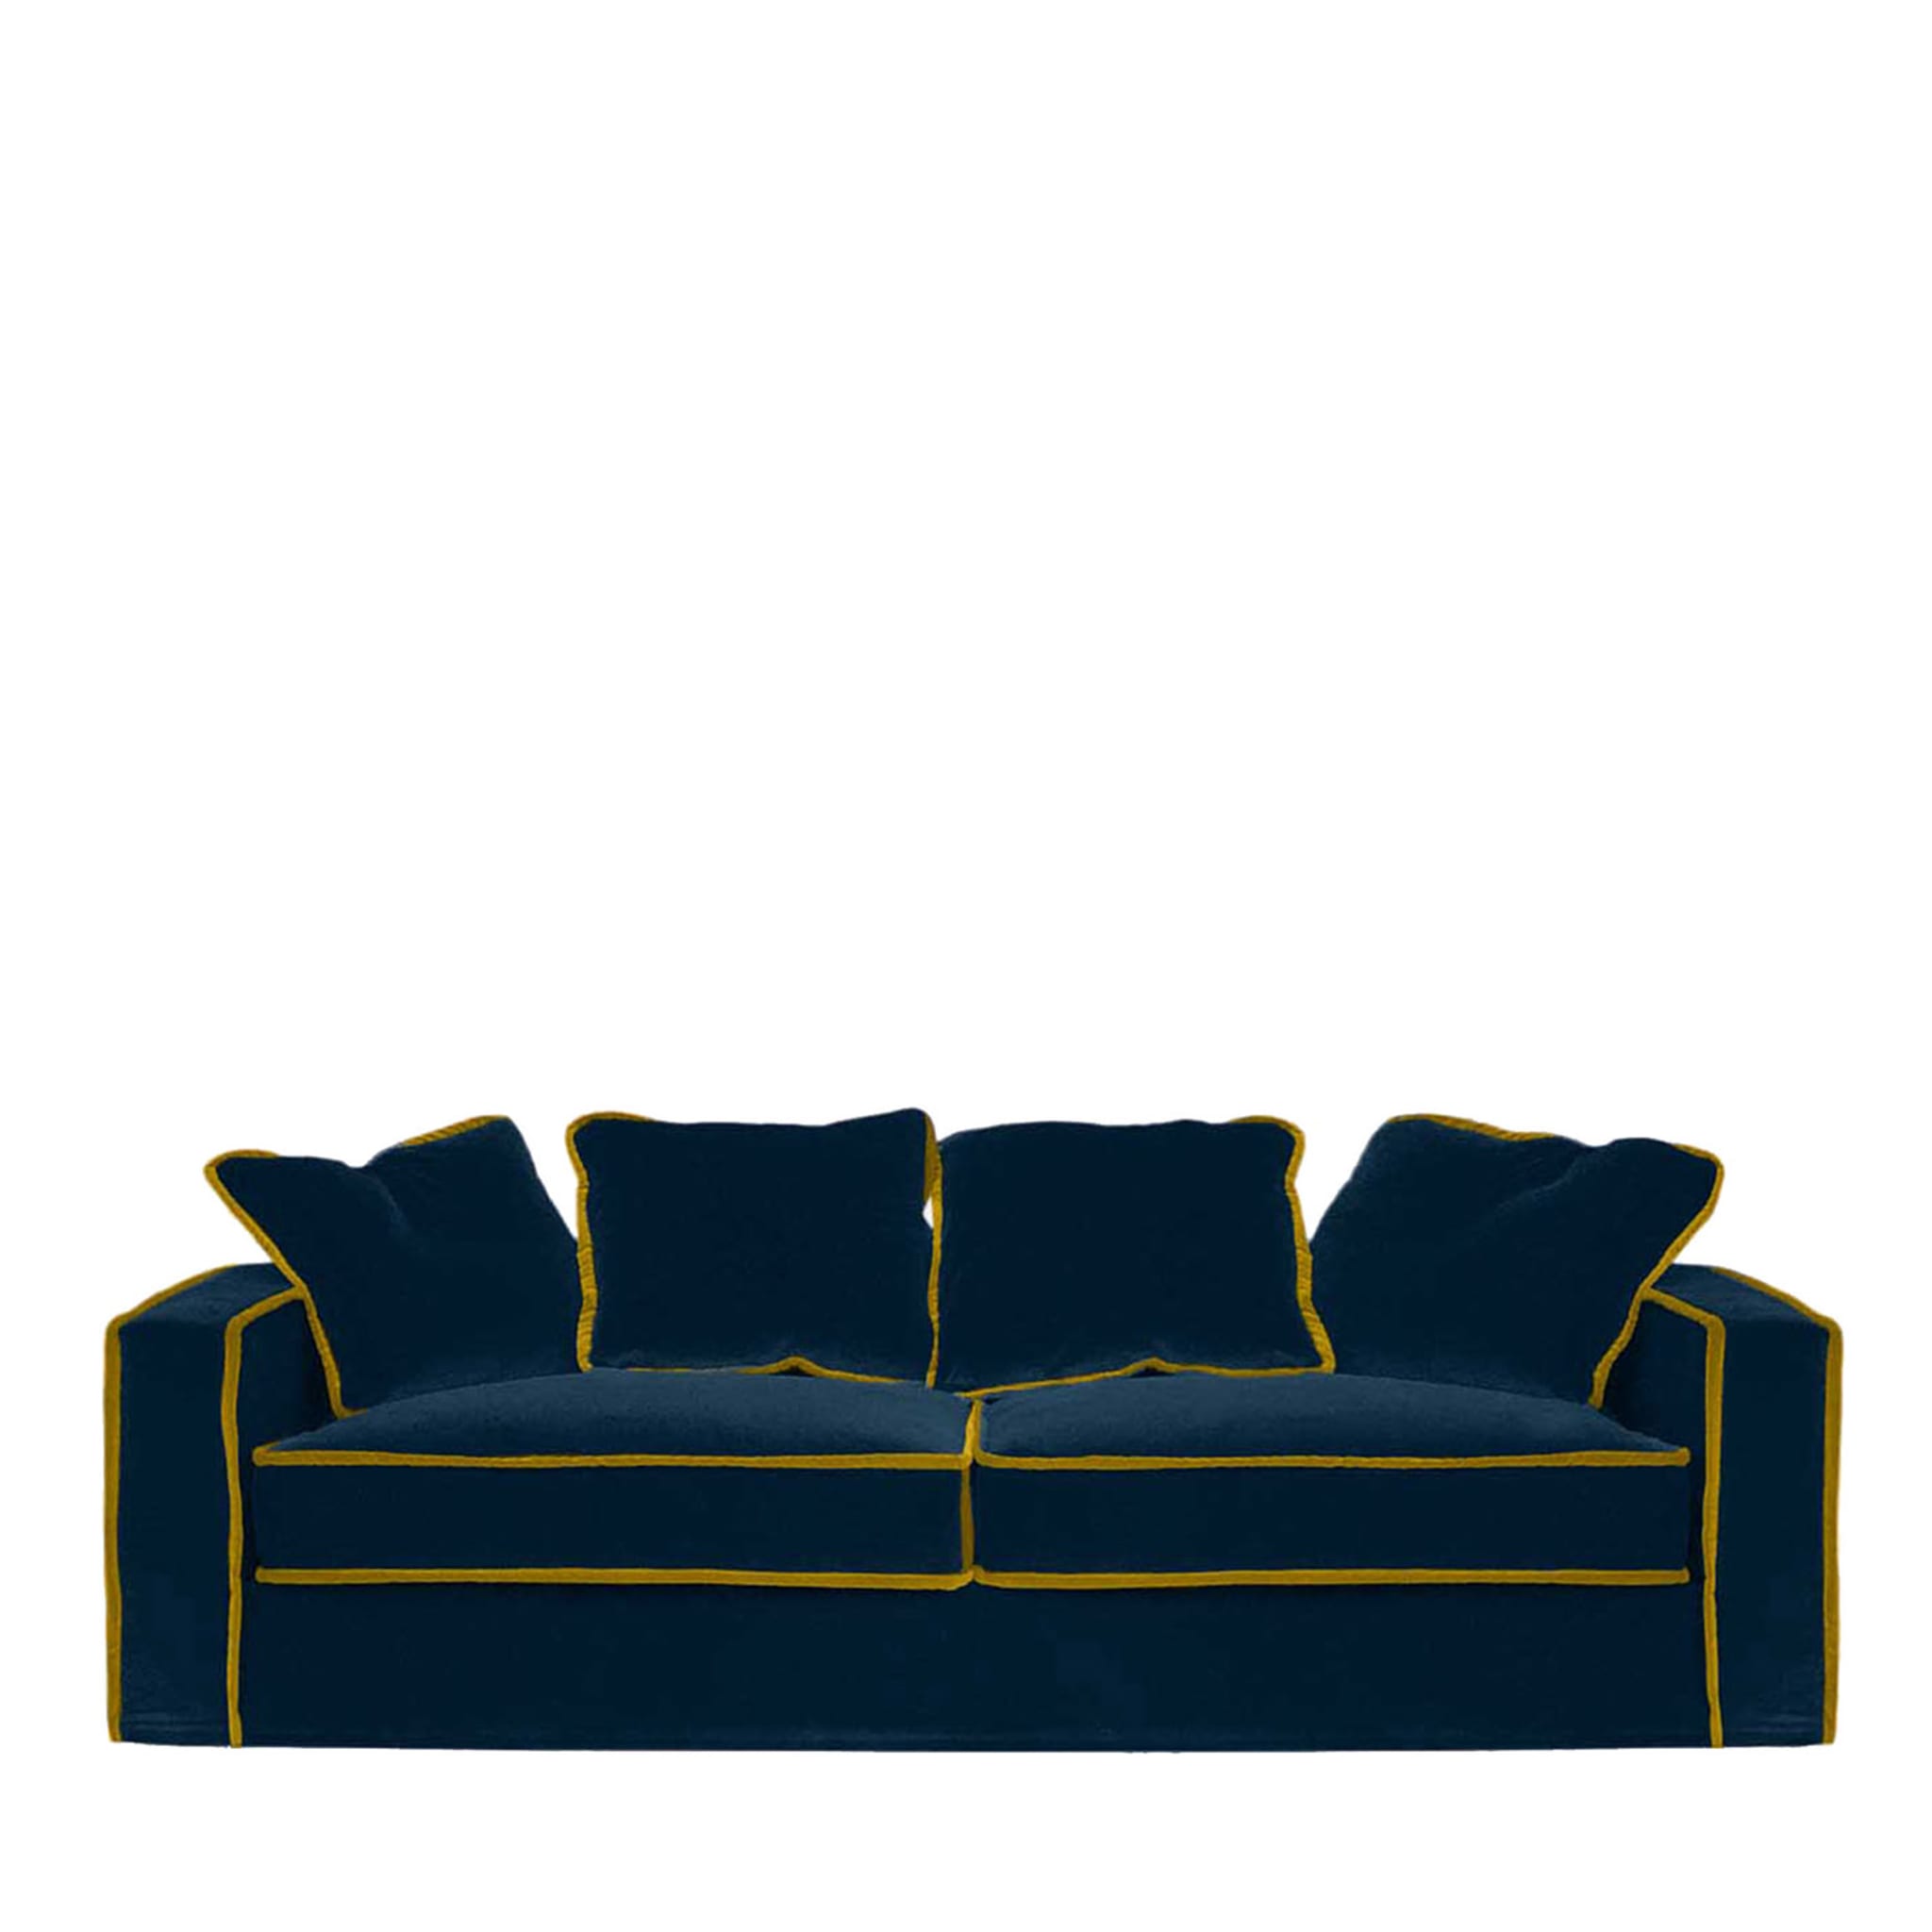 Rafaella Midnight Blue & Gold Velvet 3 Seater Sofa - Main view